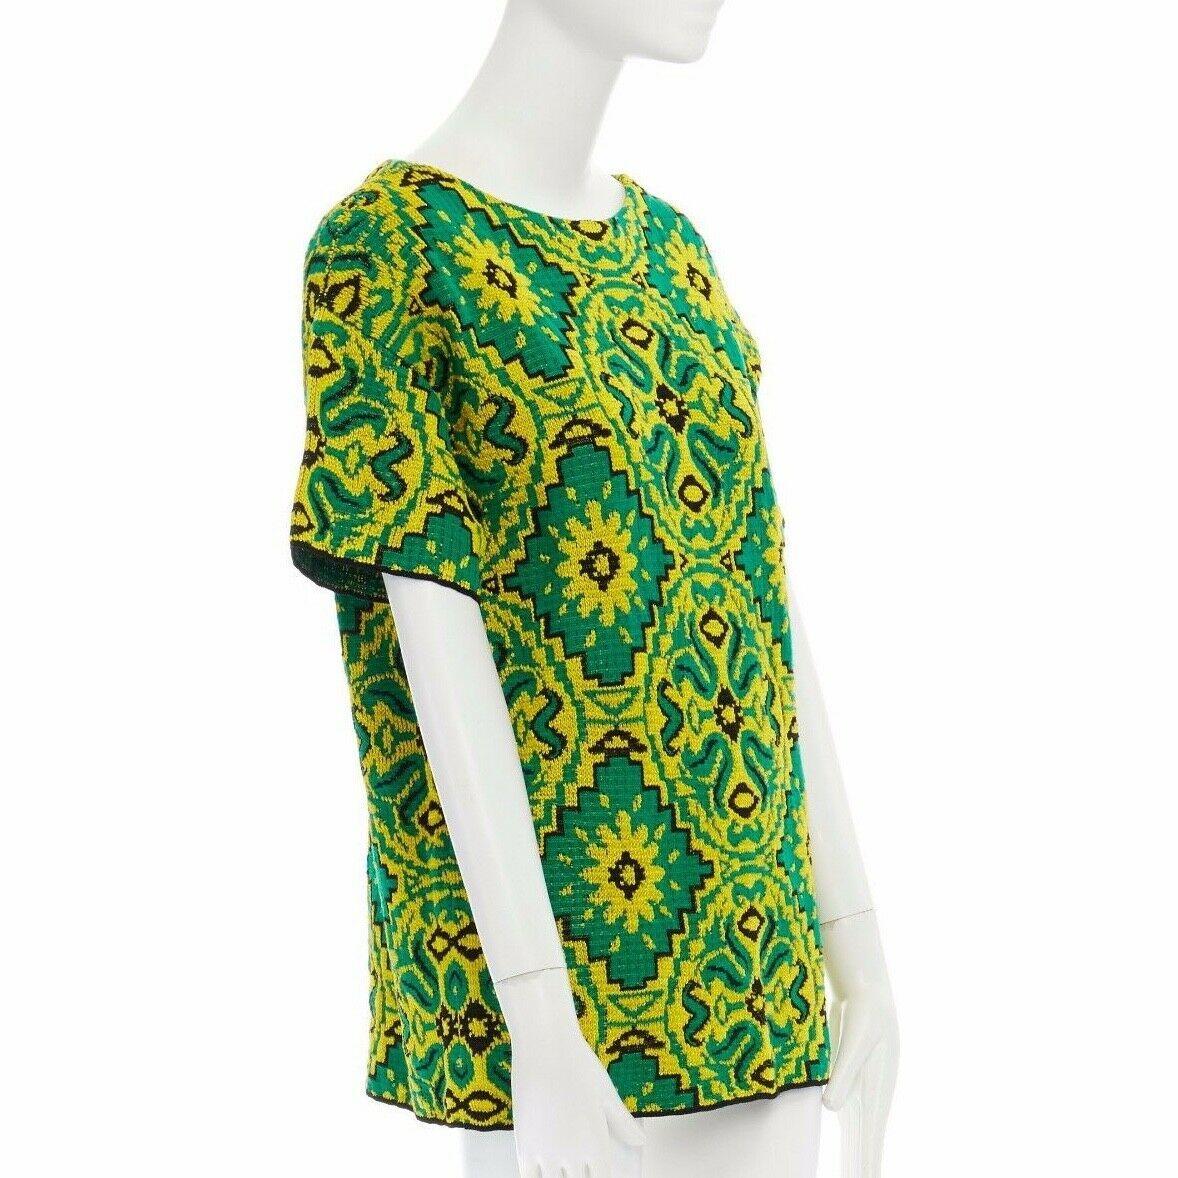 floral jaquard knit top